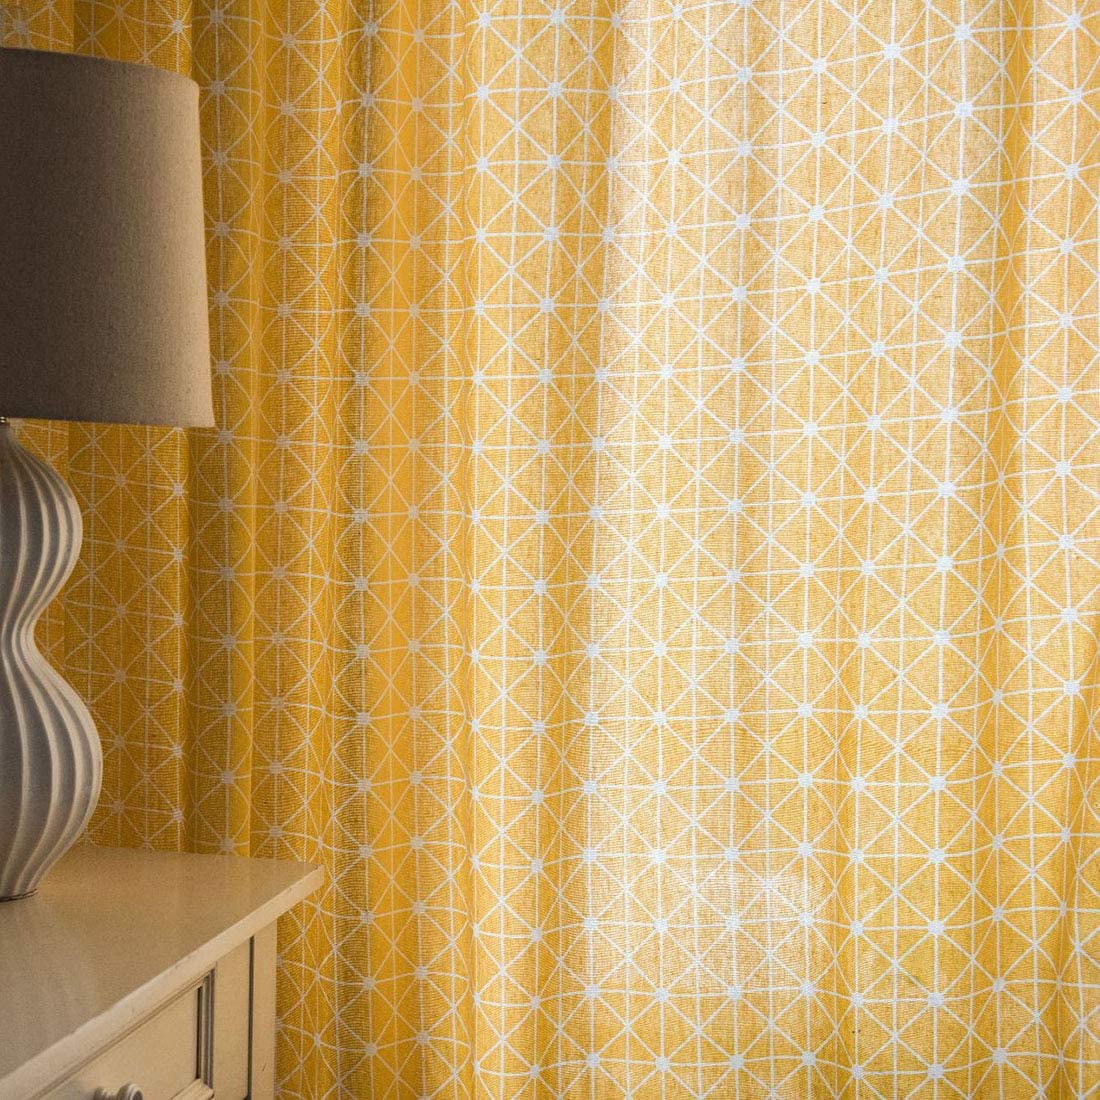 Yellow Cotton Linen Curtains Tassels Living Room Bedroom Window Drape Treatment 